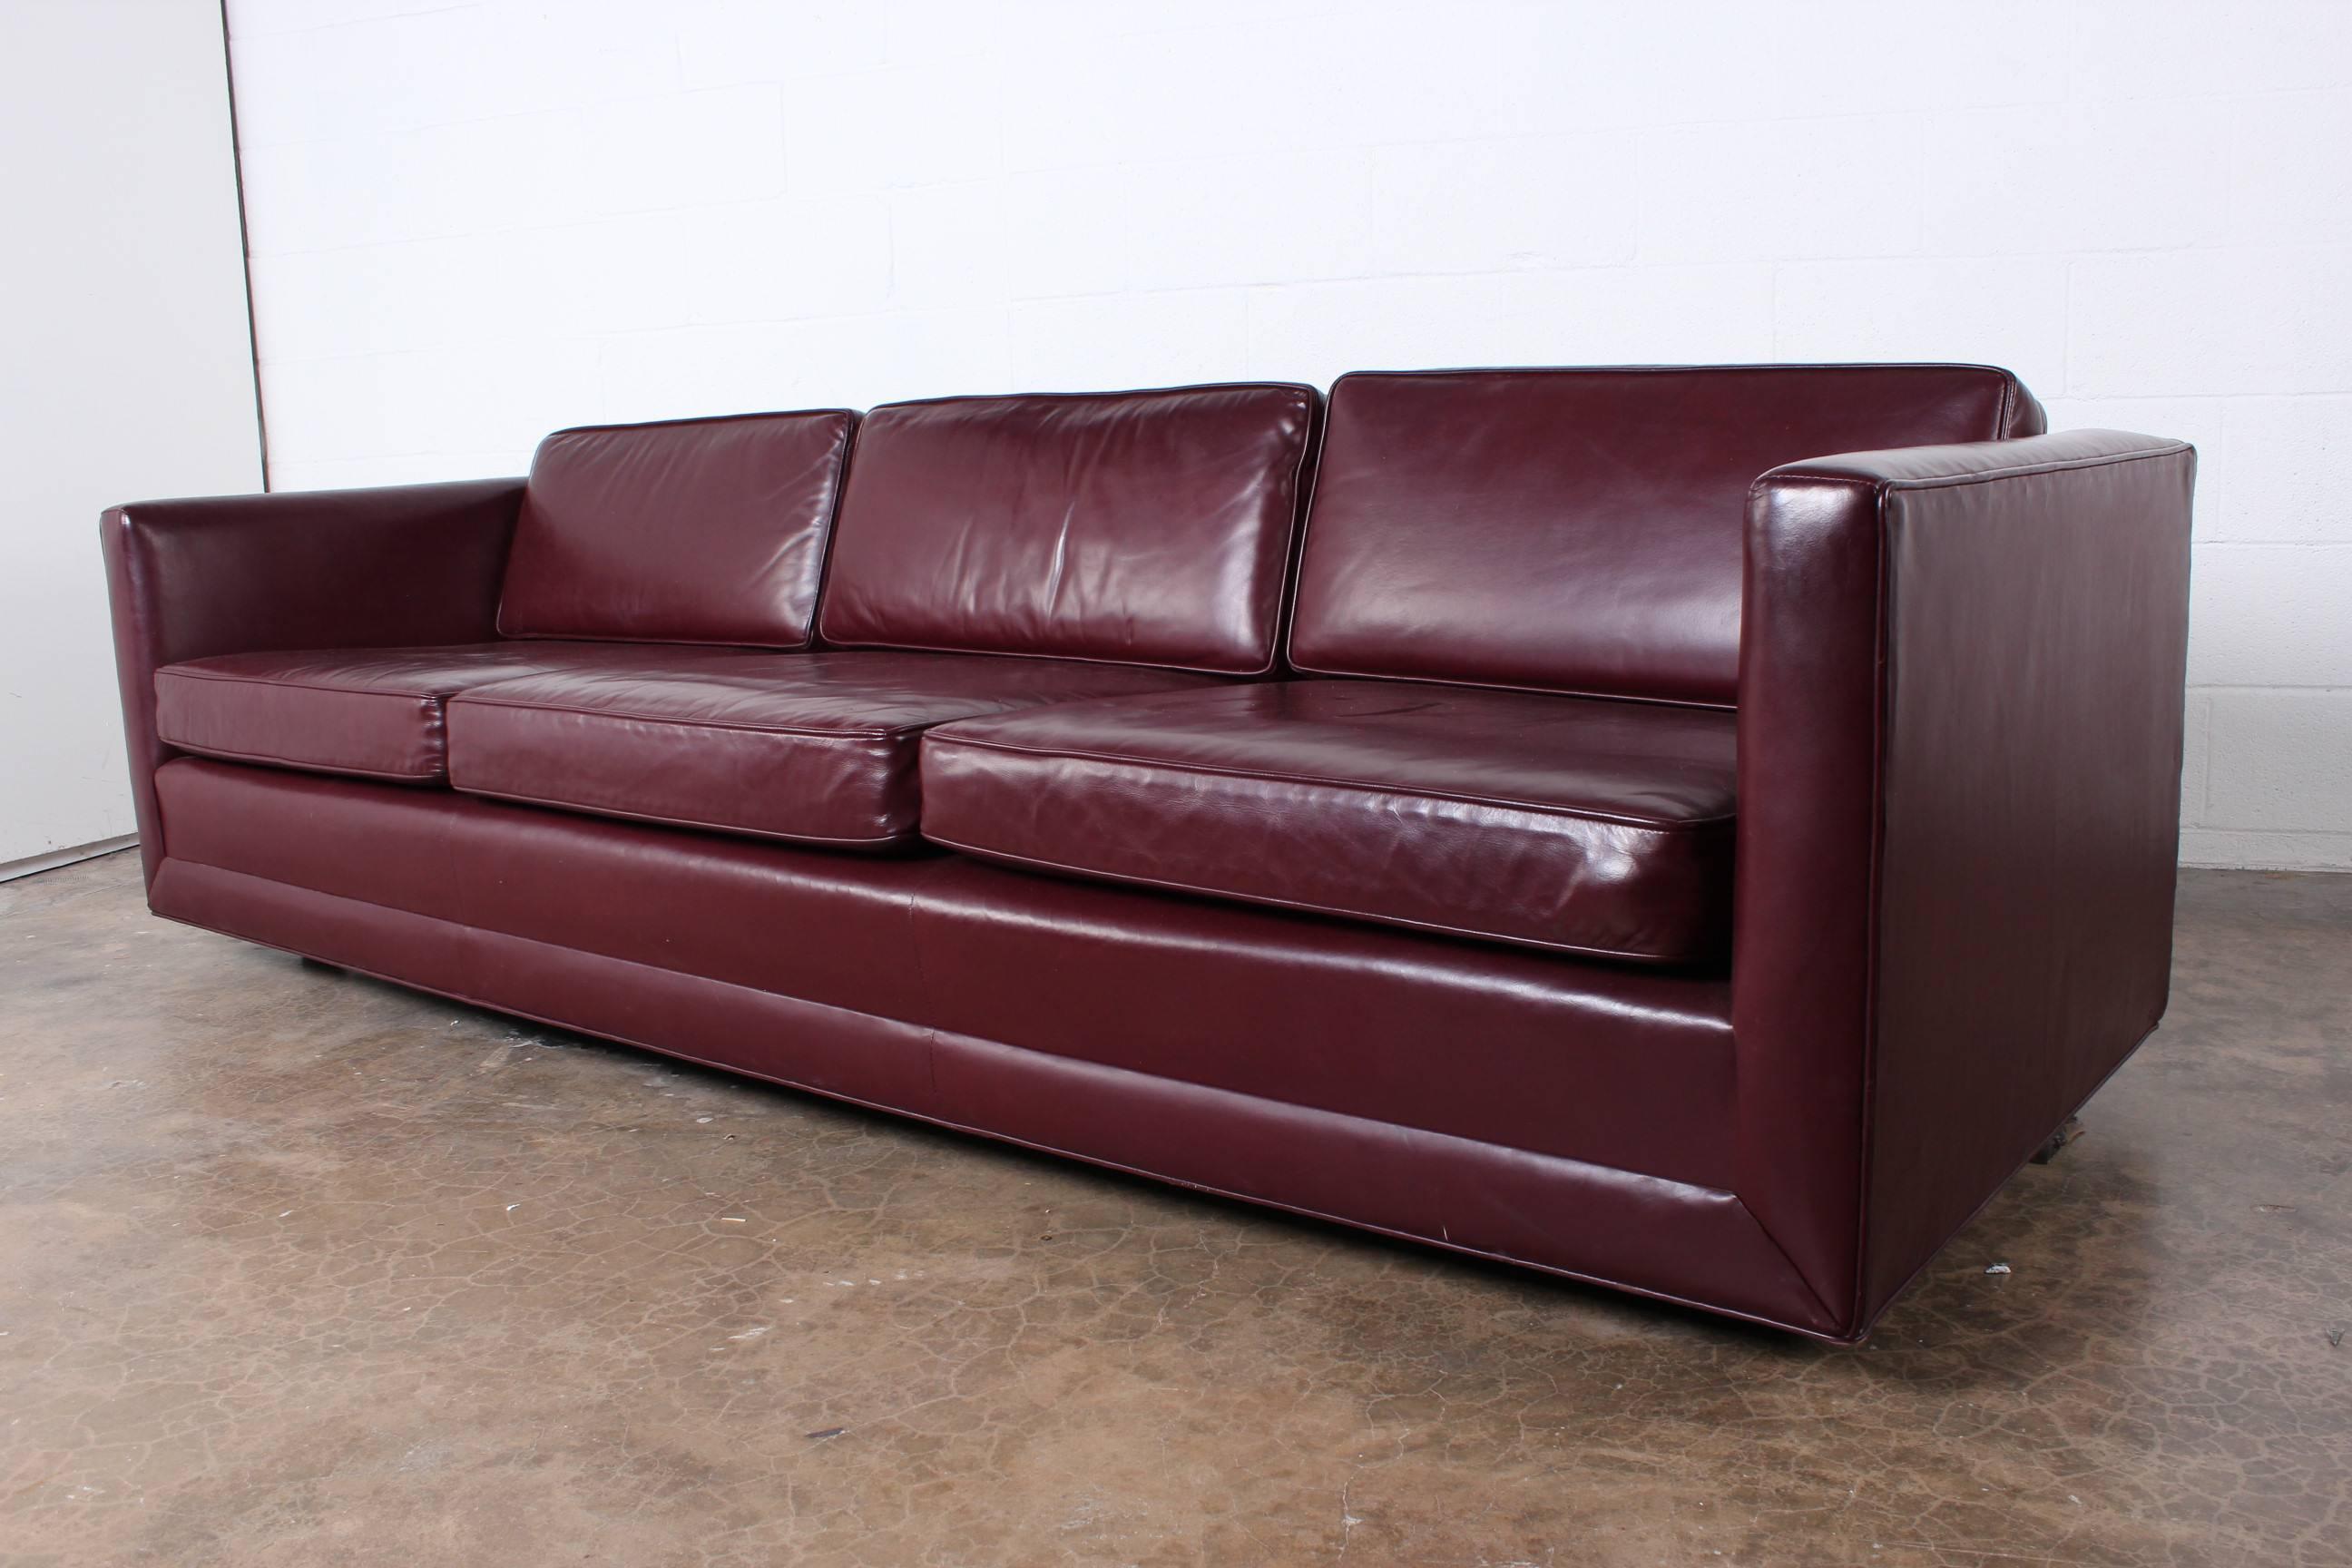 Large sofa in original burgundy/oxblood leather designed by Ward Bennett for Brickel.